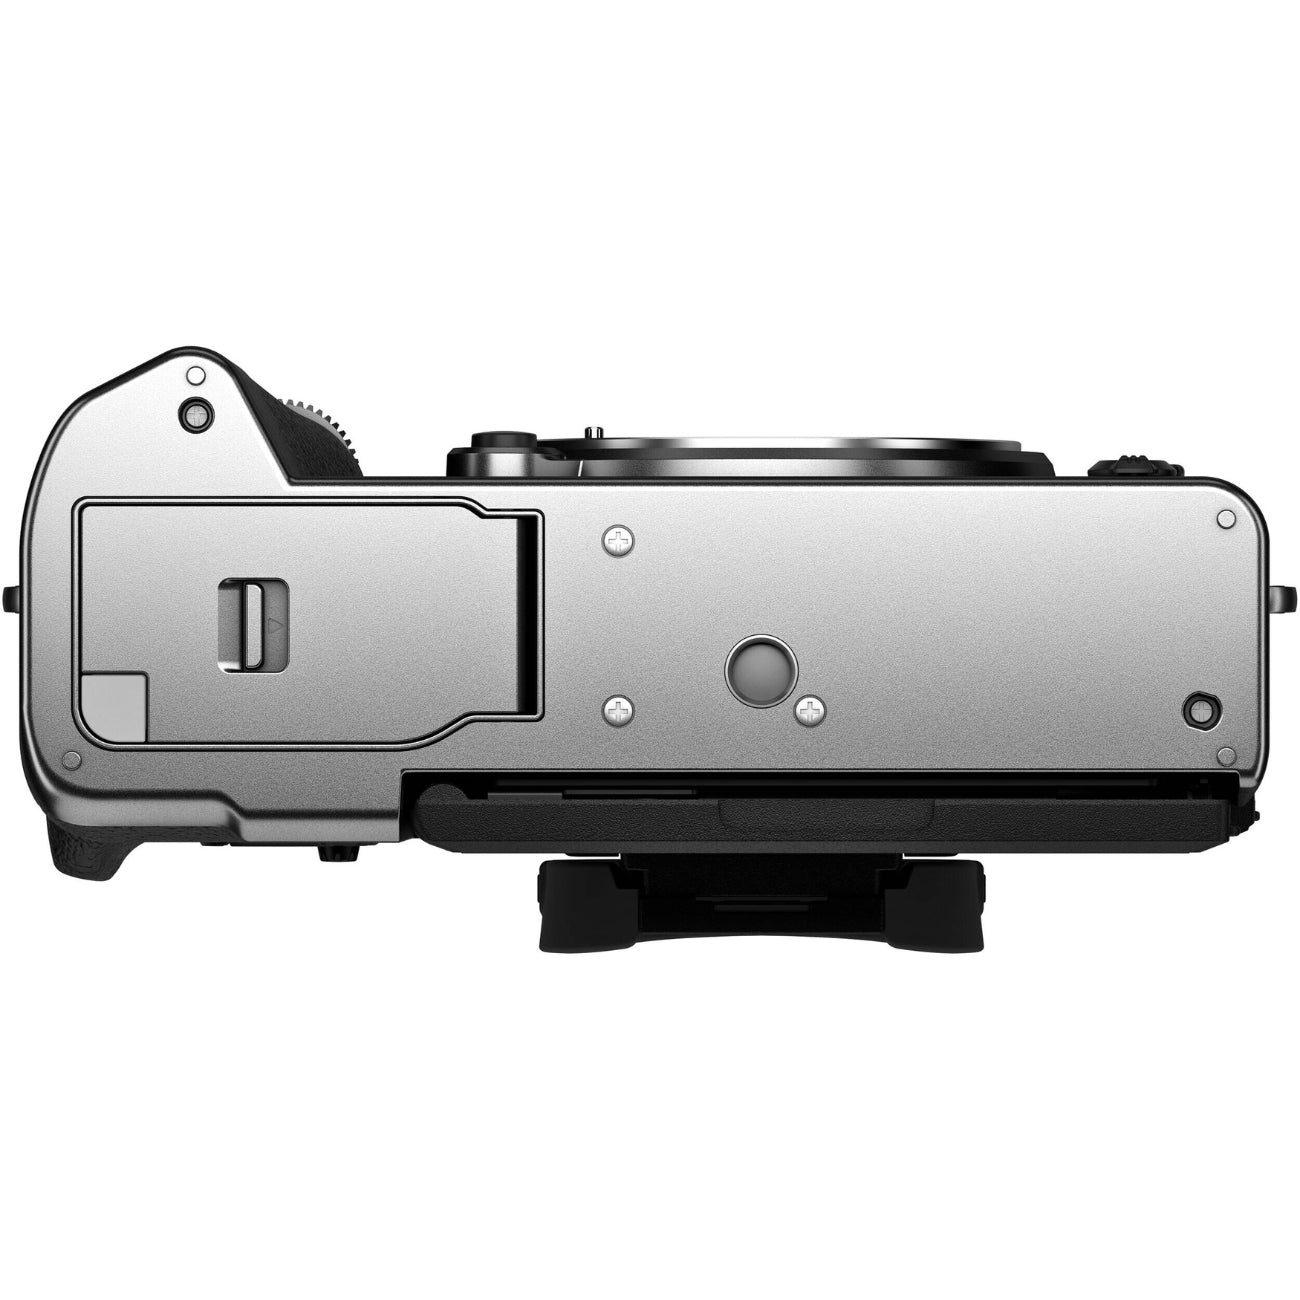 Bottom view of the Fujifilm X-T5 (Silver)